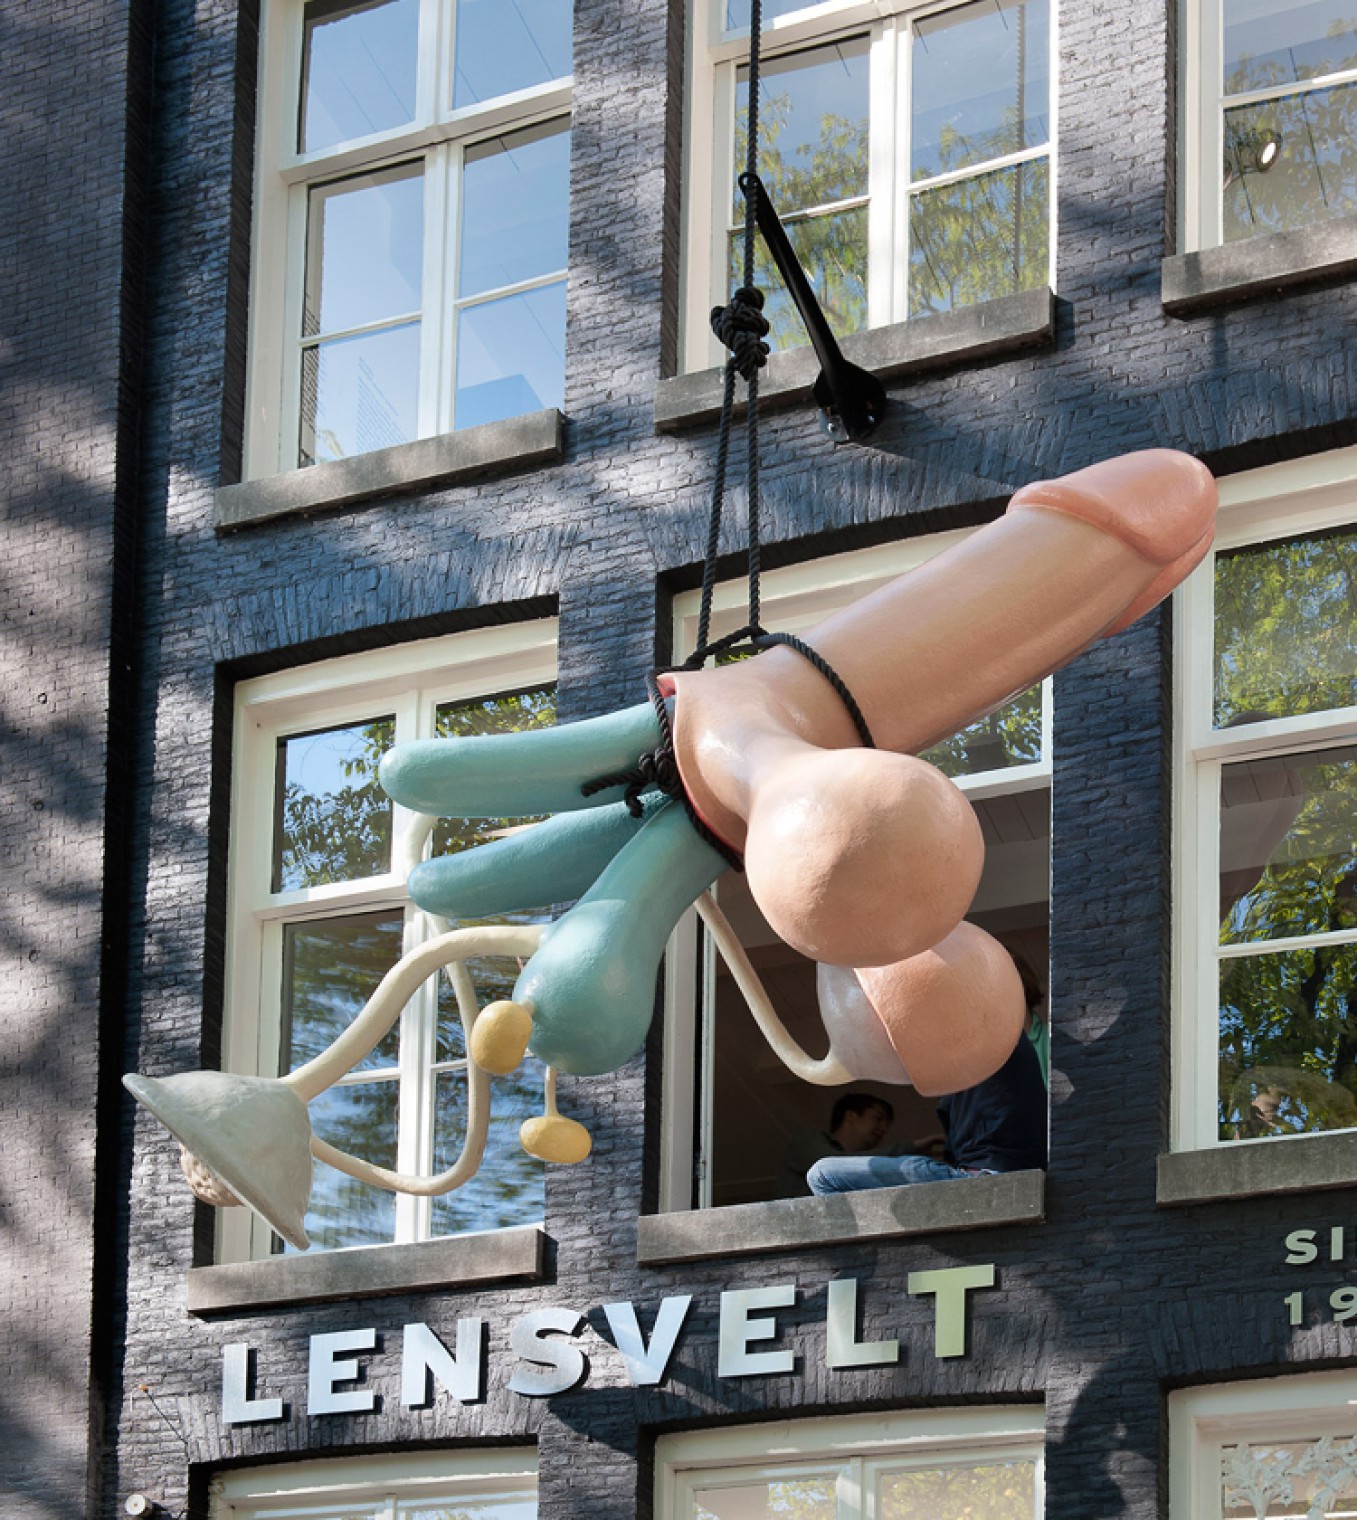  Hans Lensvelts favorite artwork by Joep van Lieshout was hoisted up